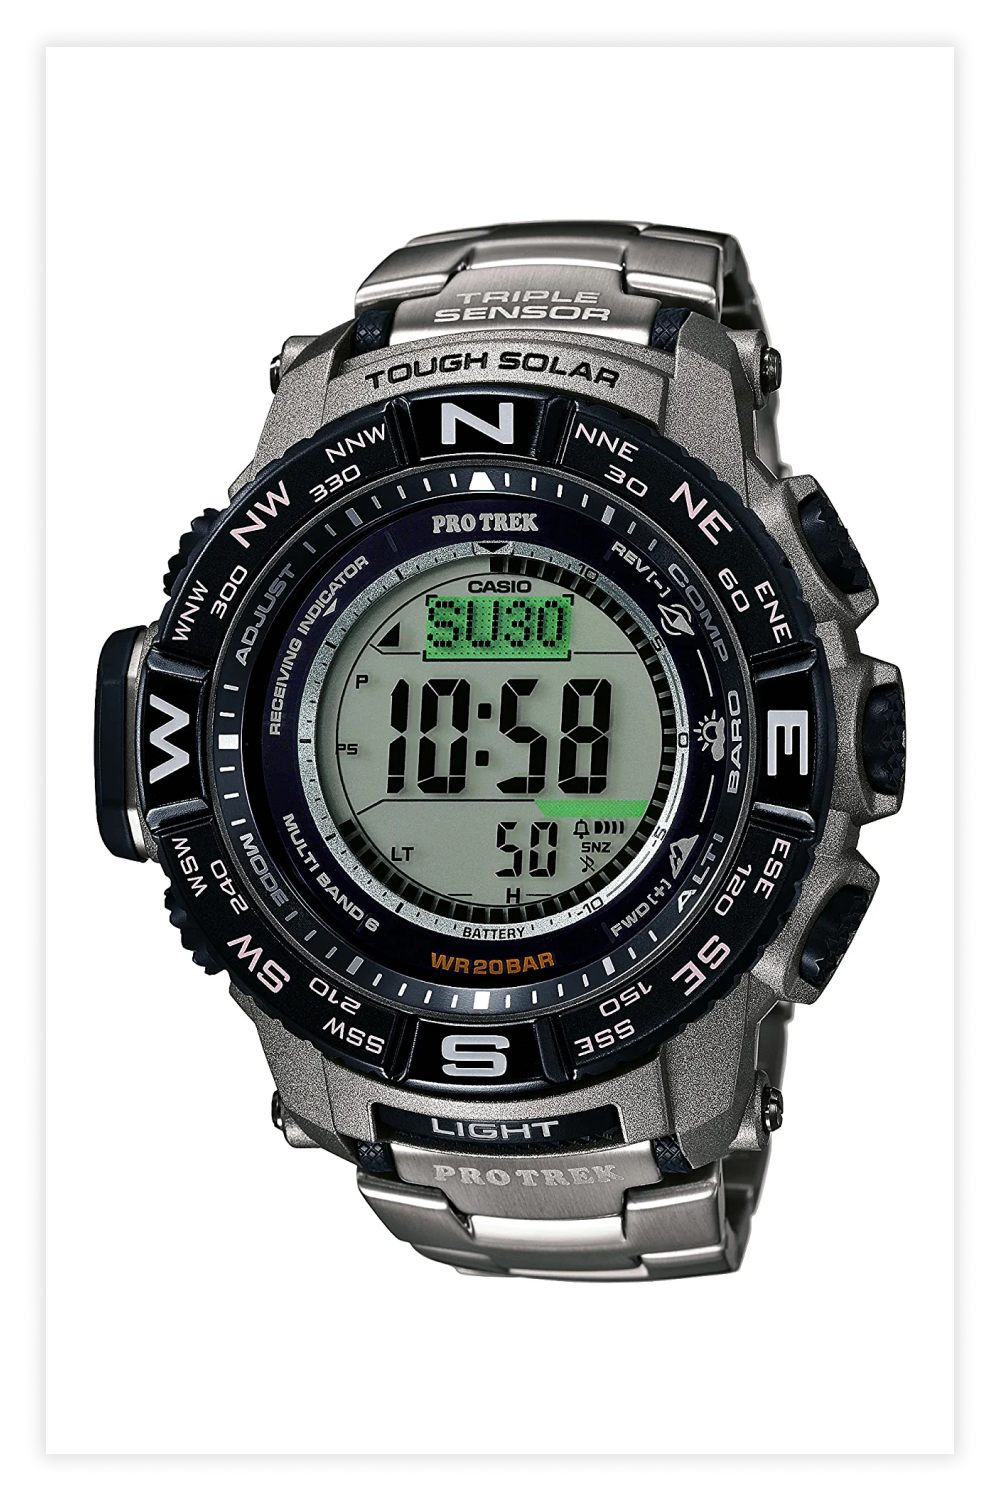 Casio Men's Pro Trek PRW-3500T-7CR Tough Solar Triple Sensor Digital Sport Watch.